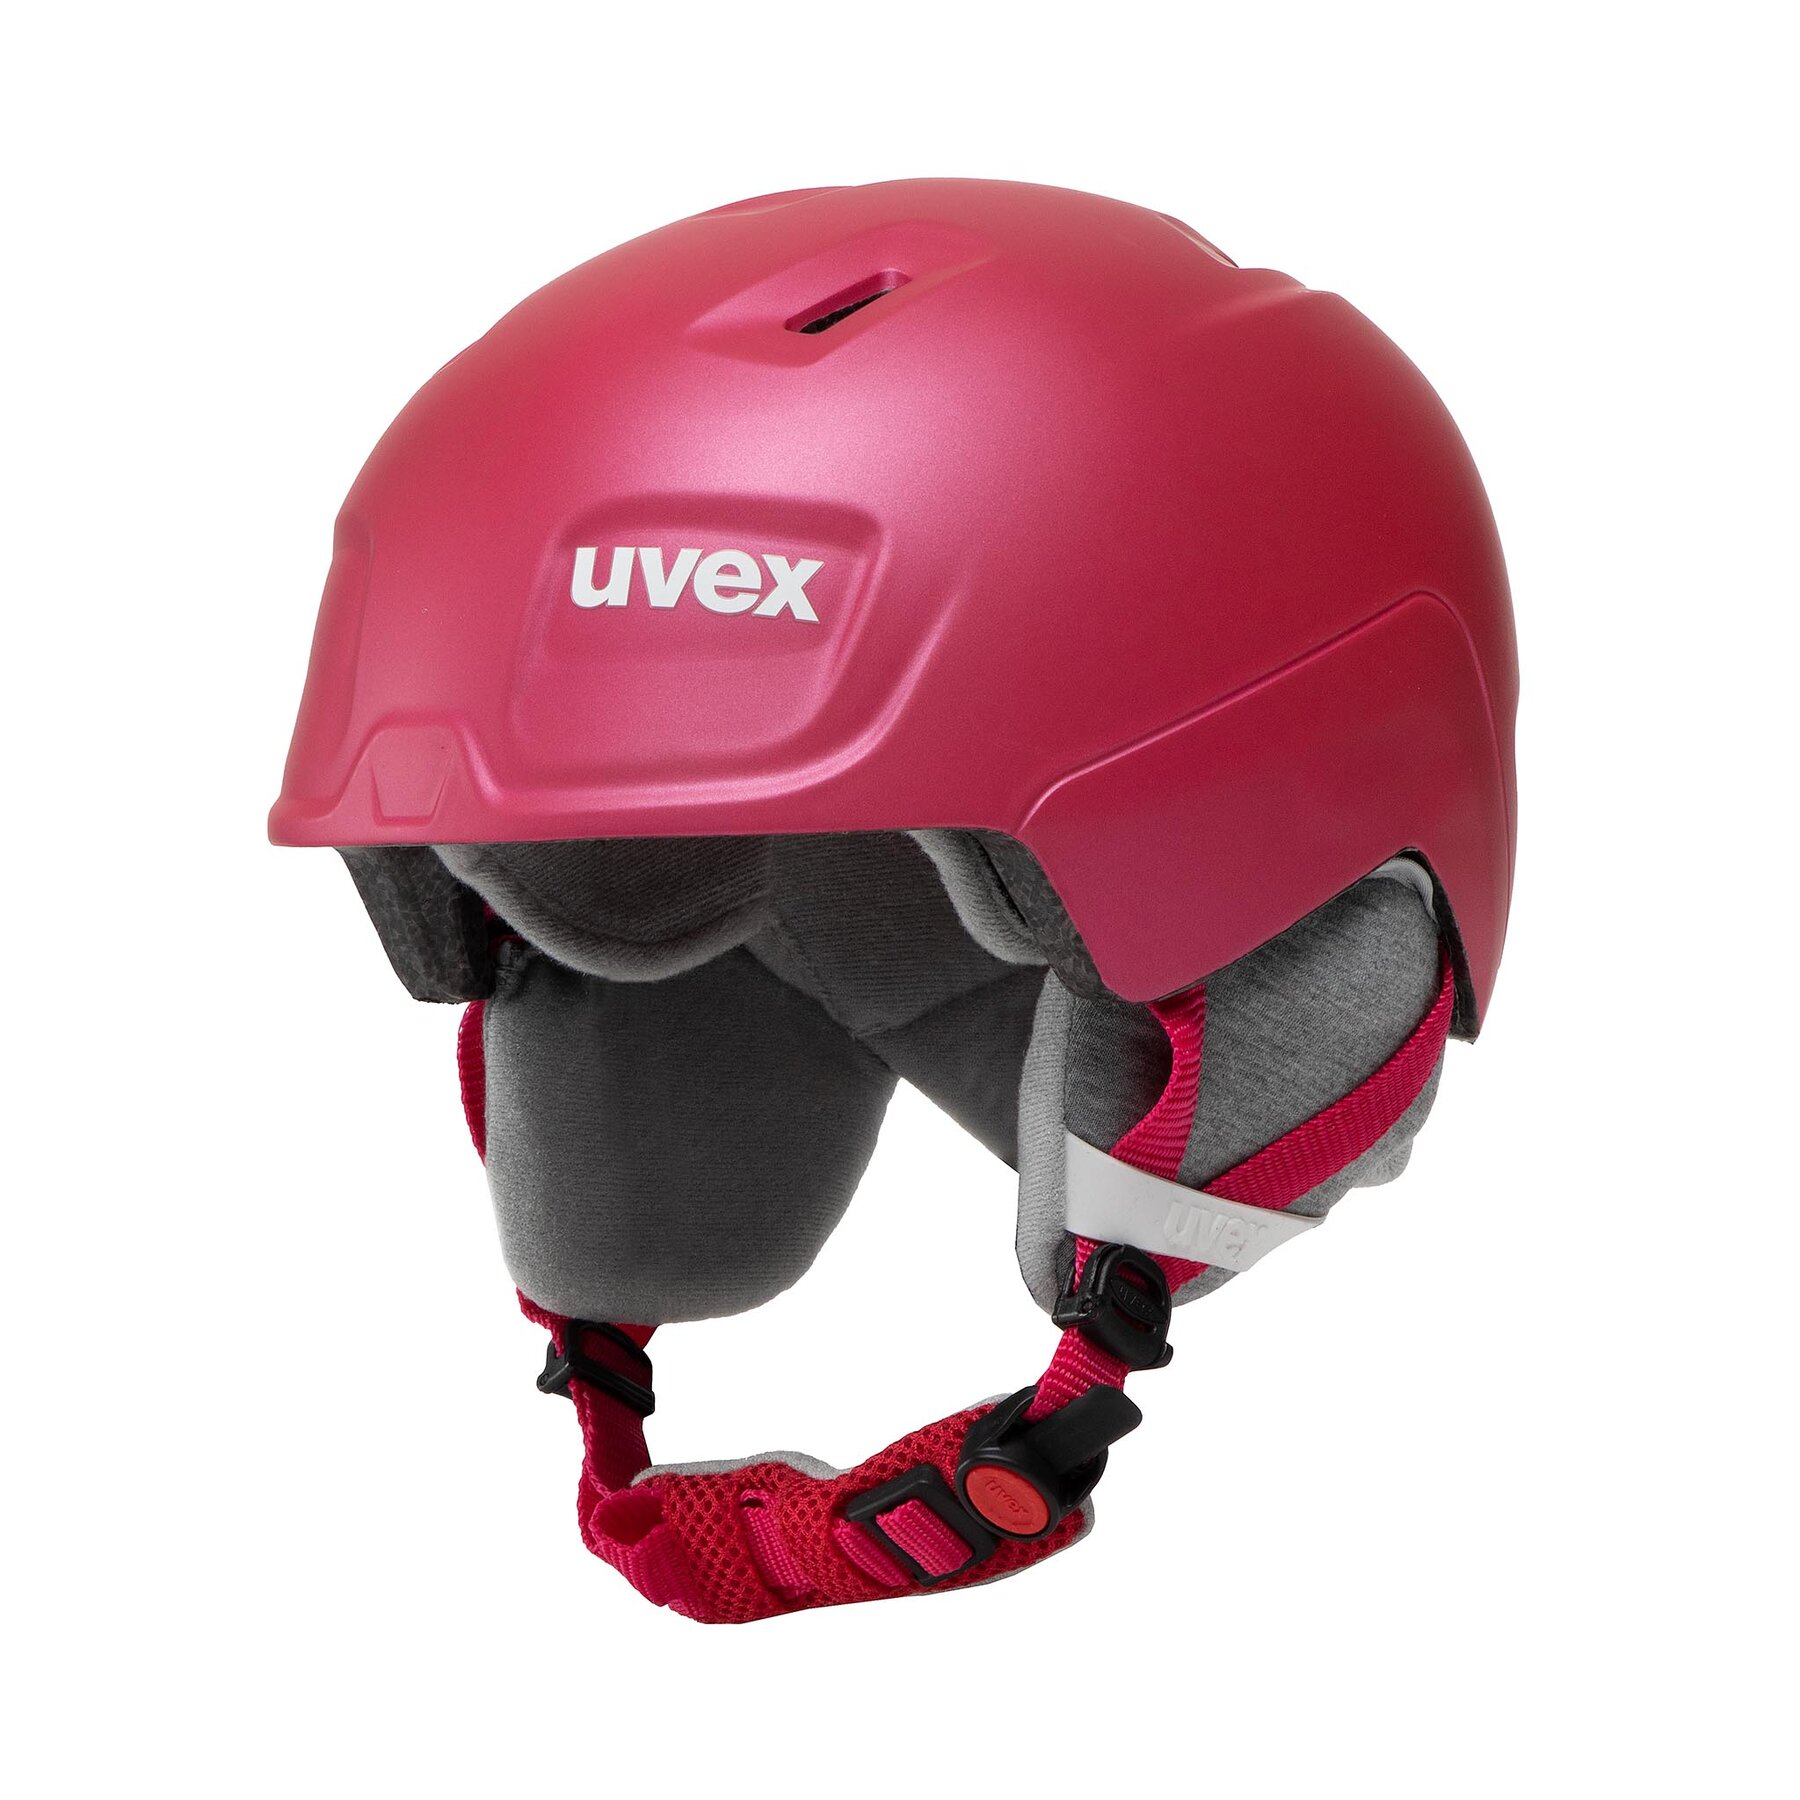 uvex Manic Pro - Cascos de esquí